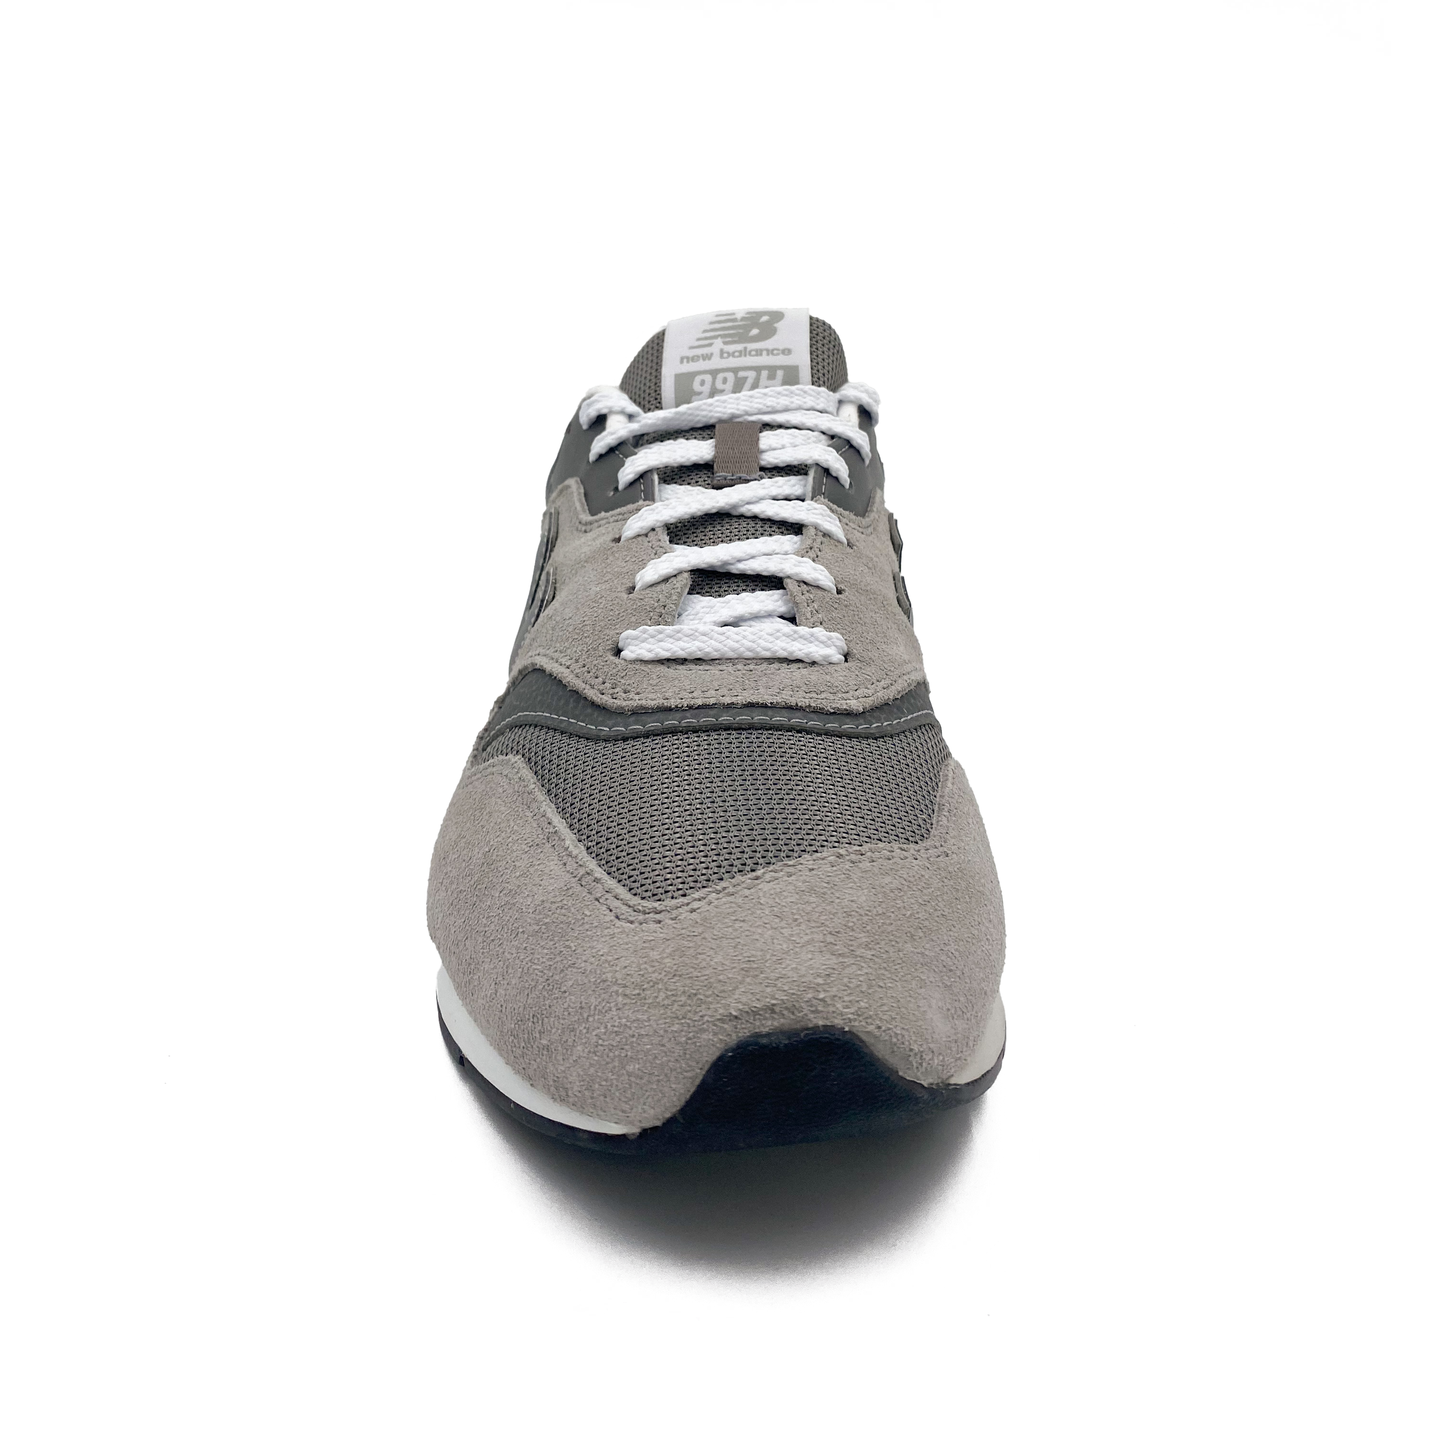 New Balance Sneaker 997 Grey